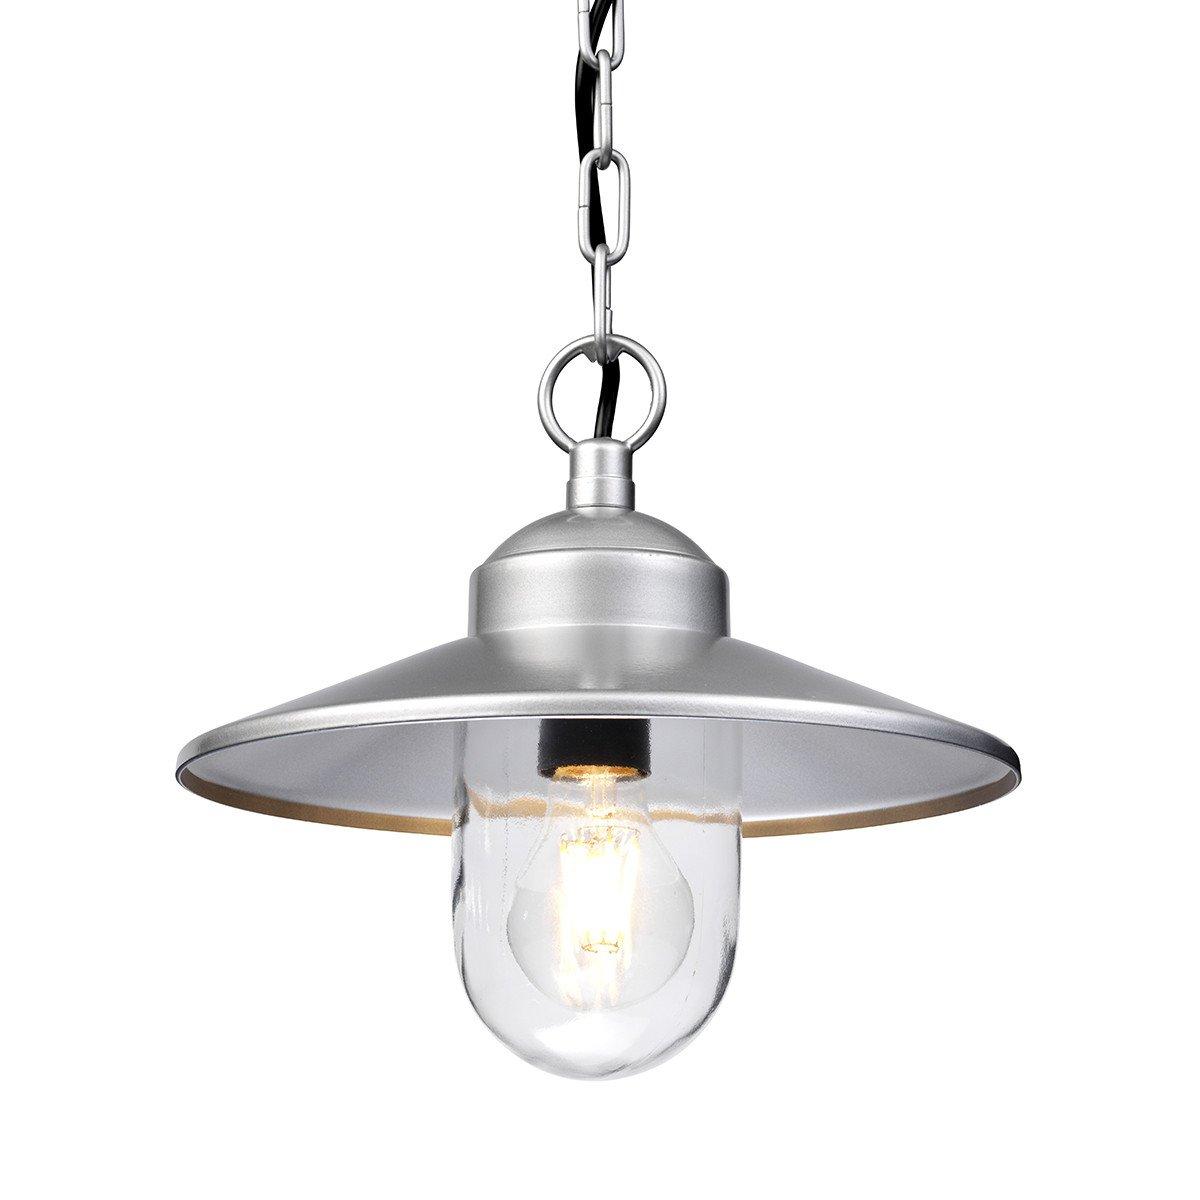 Klampenborg 1 Light Outdoor Ceiling Chain Lantern Silver IP44 E27